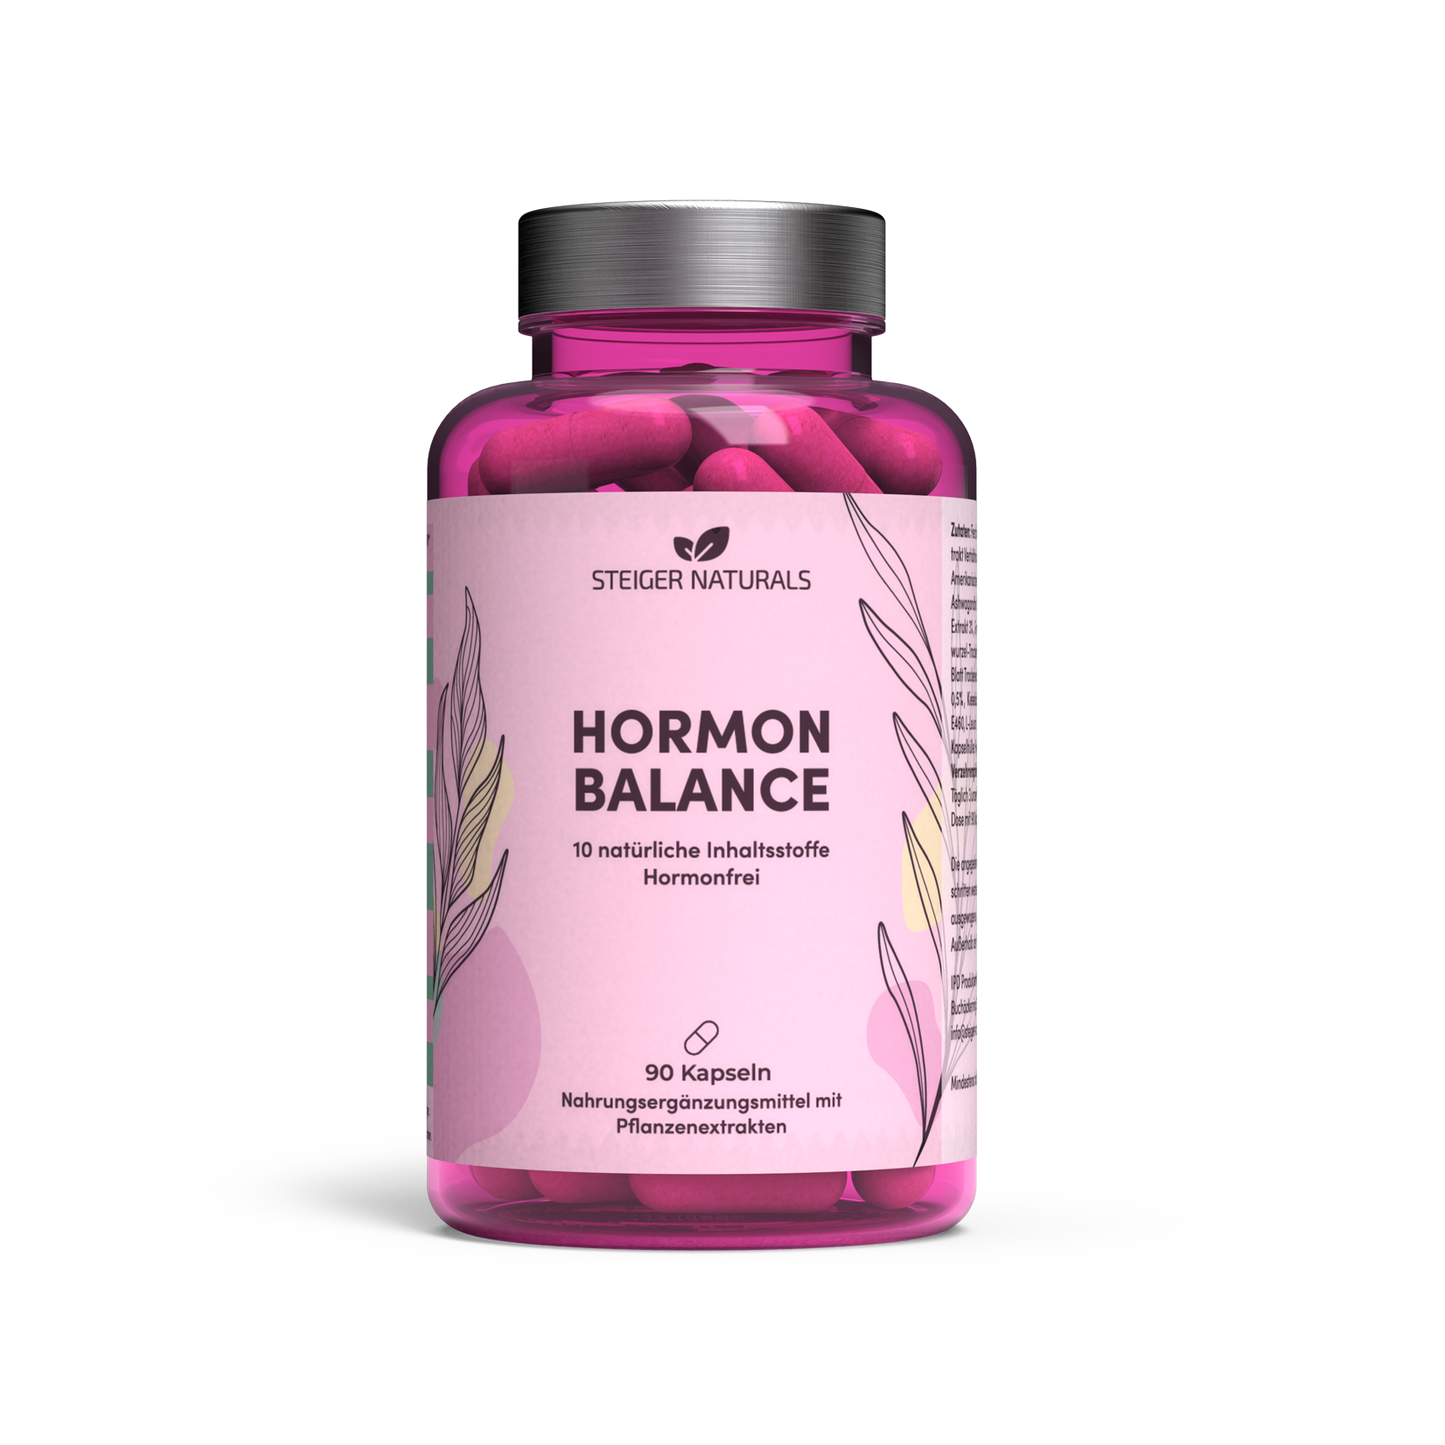 Hormone Balance - natural menopause complex